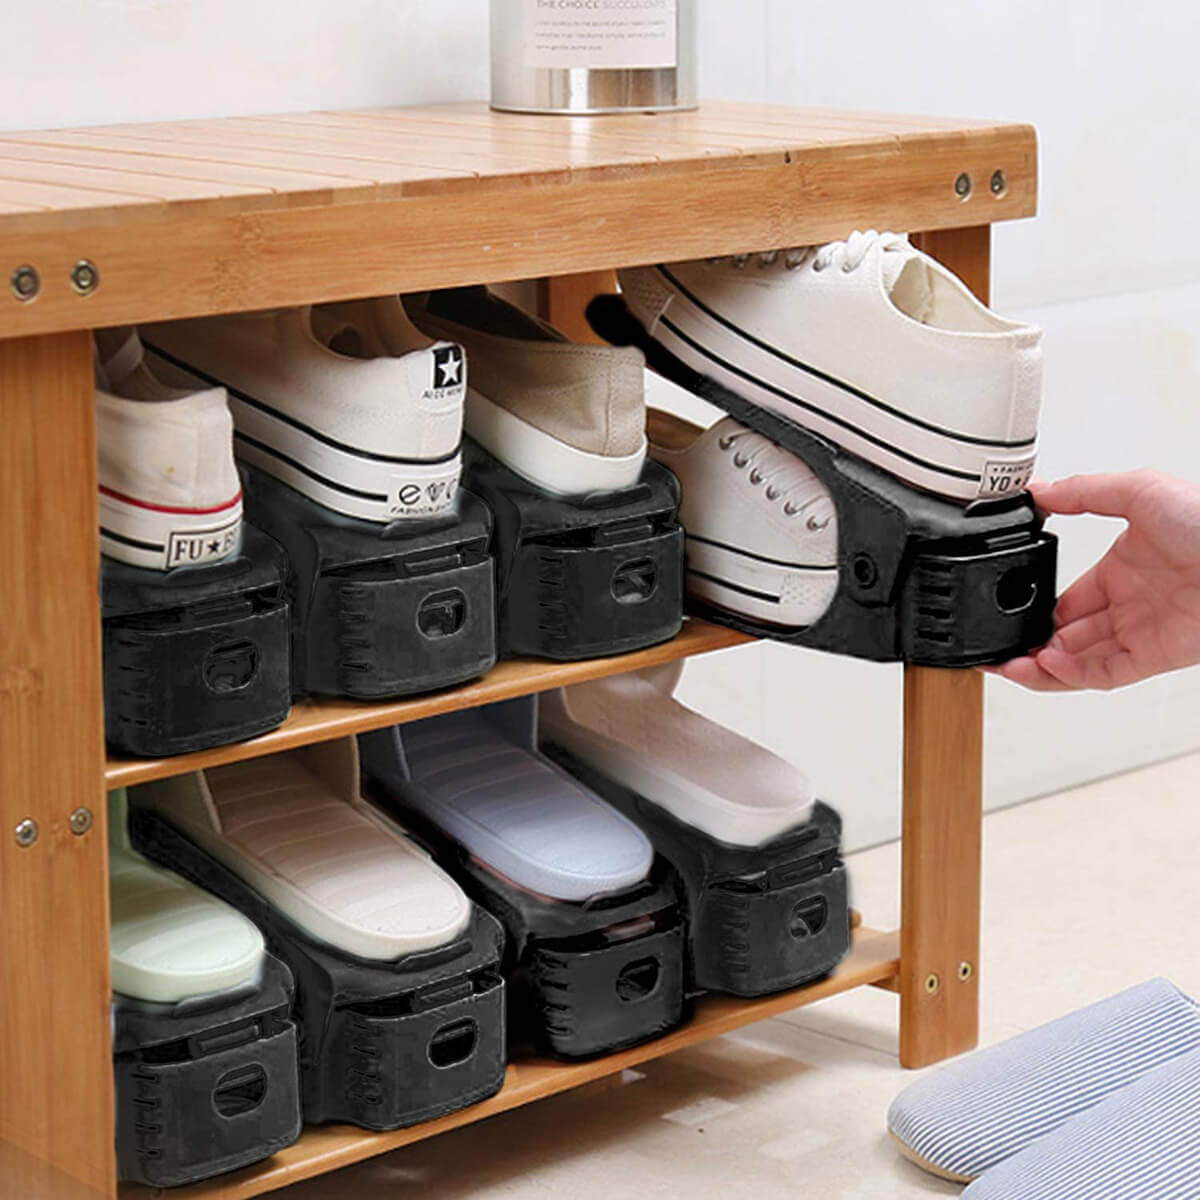 Adjustable Two-Level Shoe Storage Decks #shoeorganizer #storage #shoe #organizer #decorhomeideas